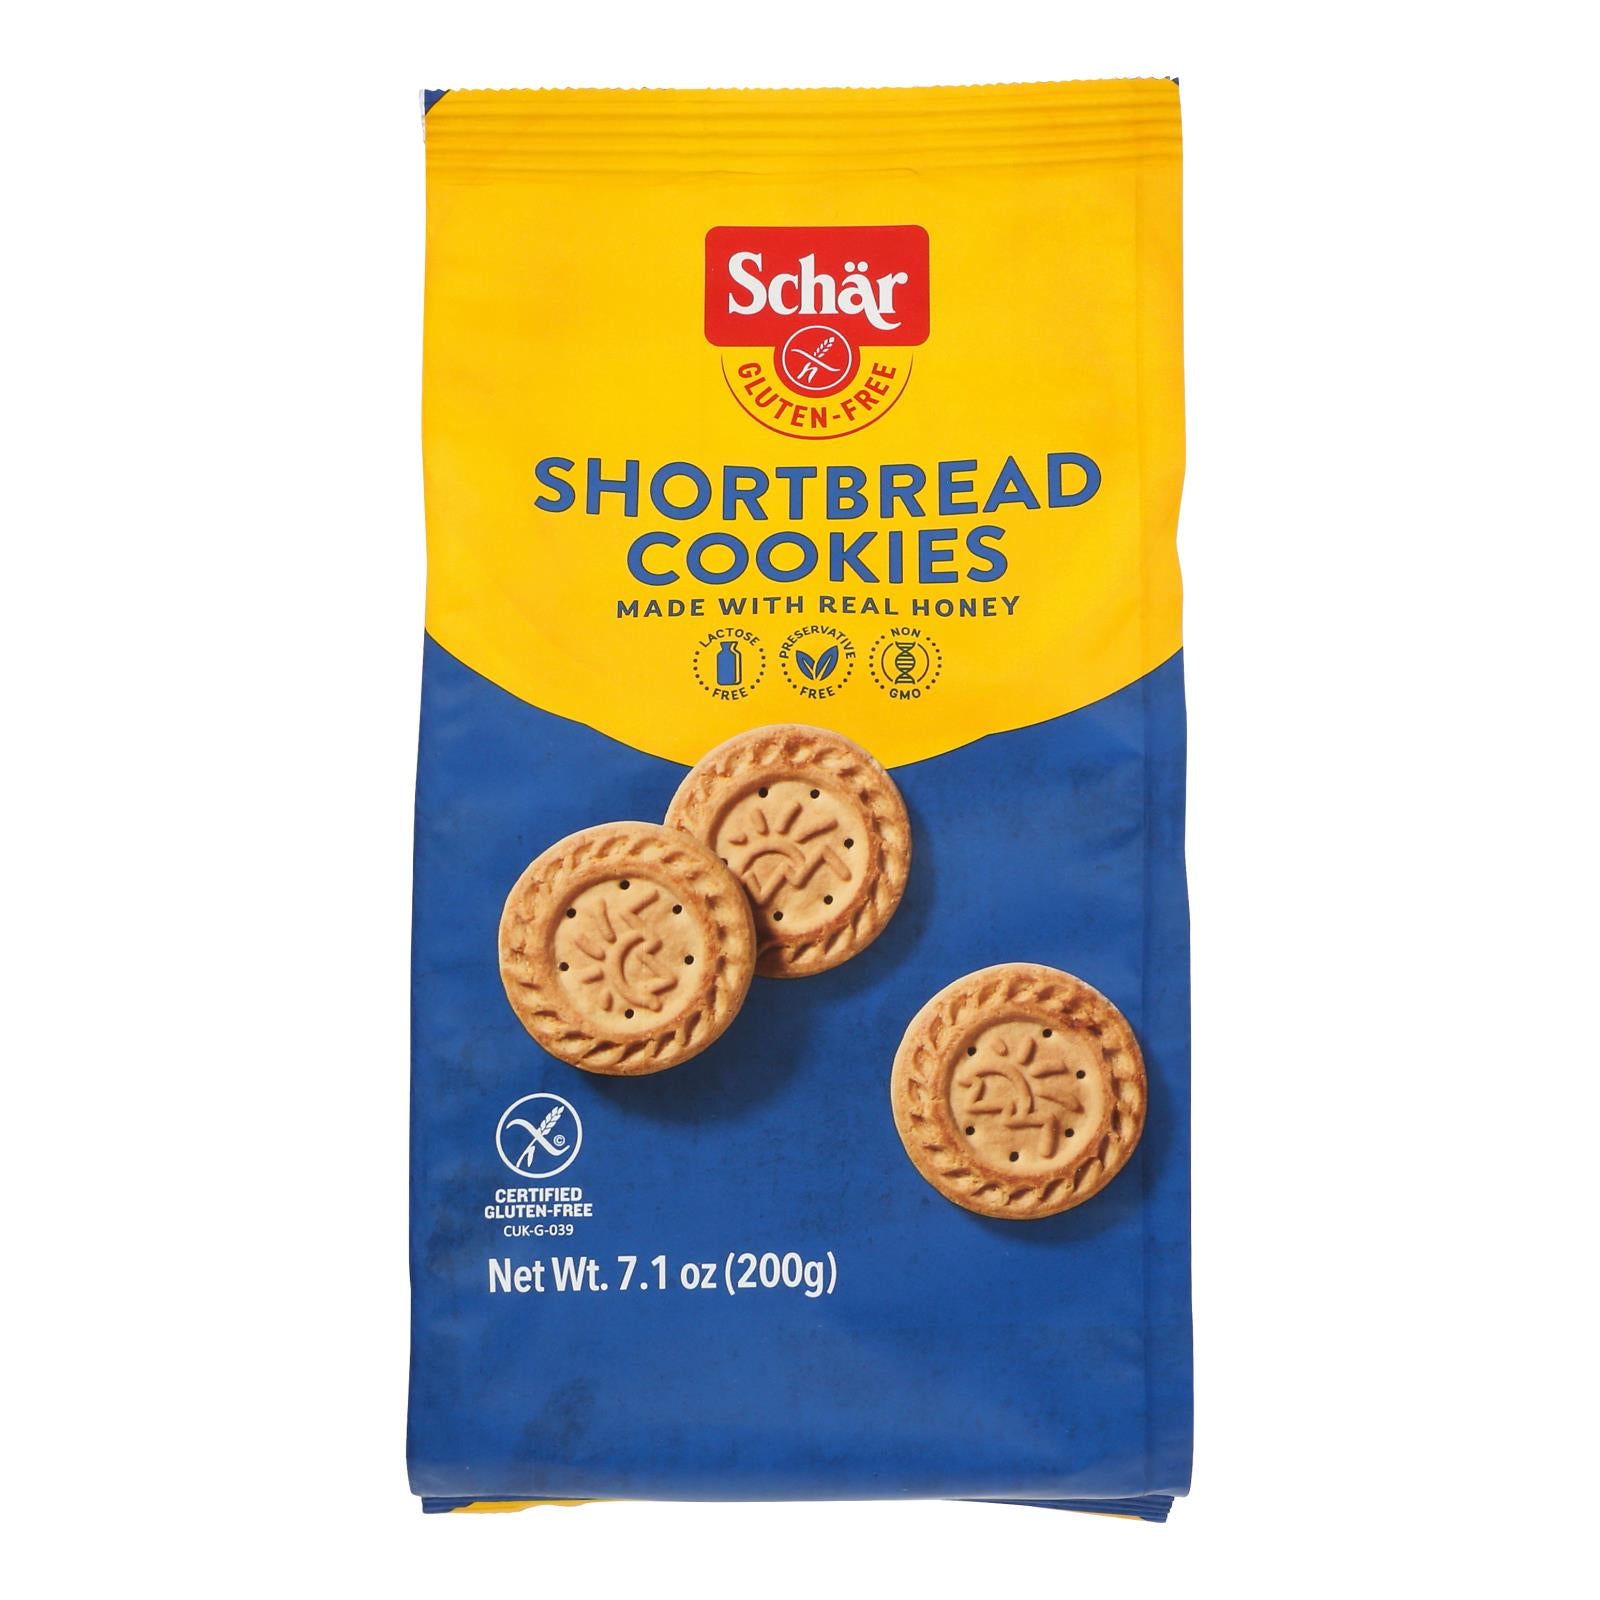 Schar Shortbread Cookies Gluten Free - Case of 12 - 7 oz.